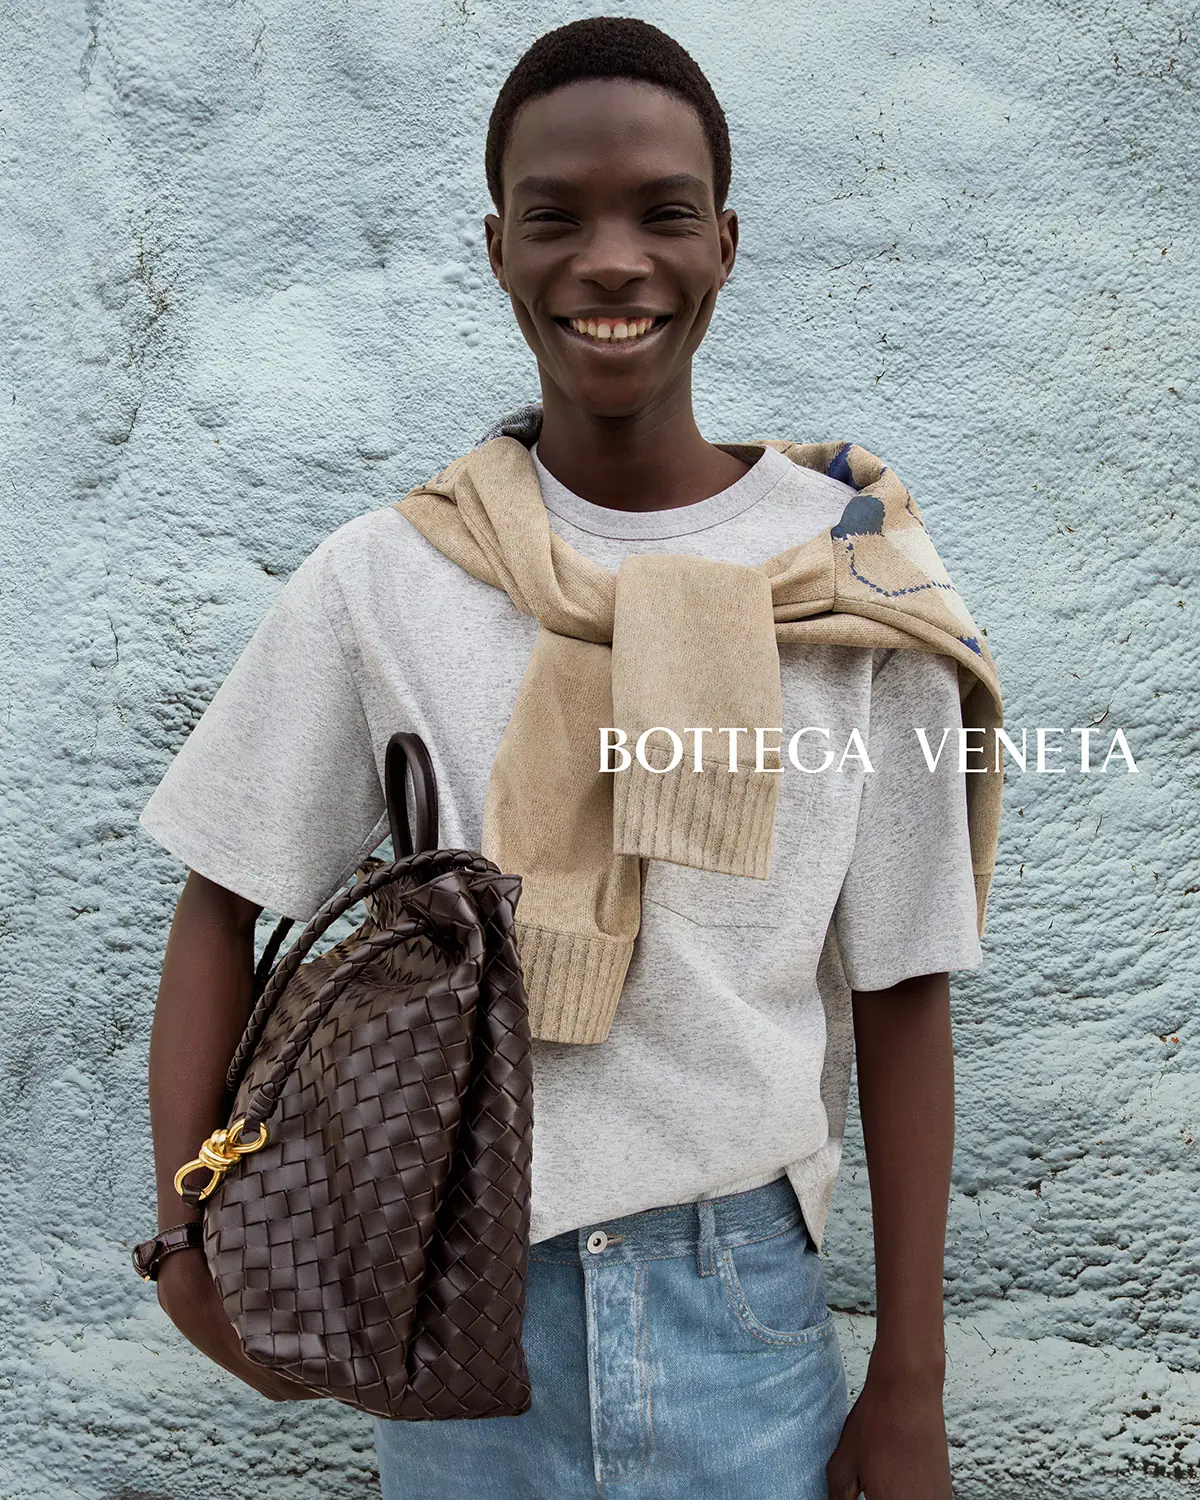 Bottega Veneta Spring Summer 2023 Campaign